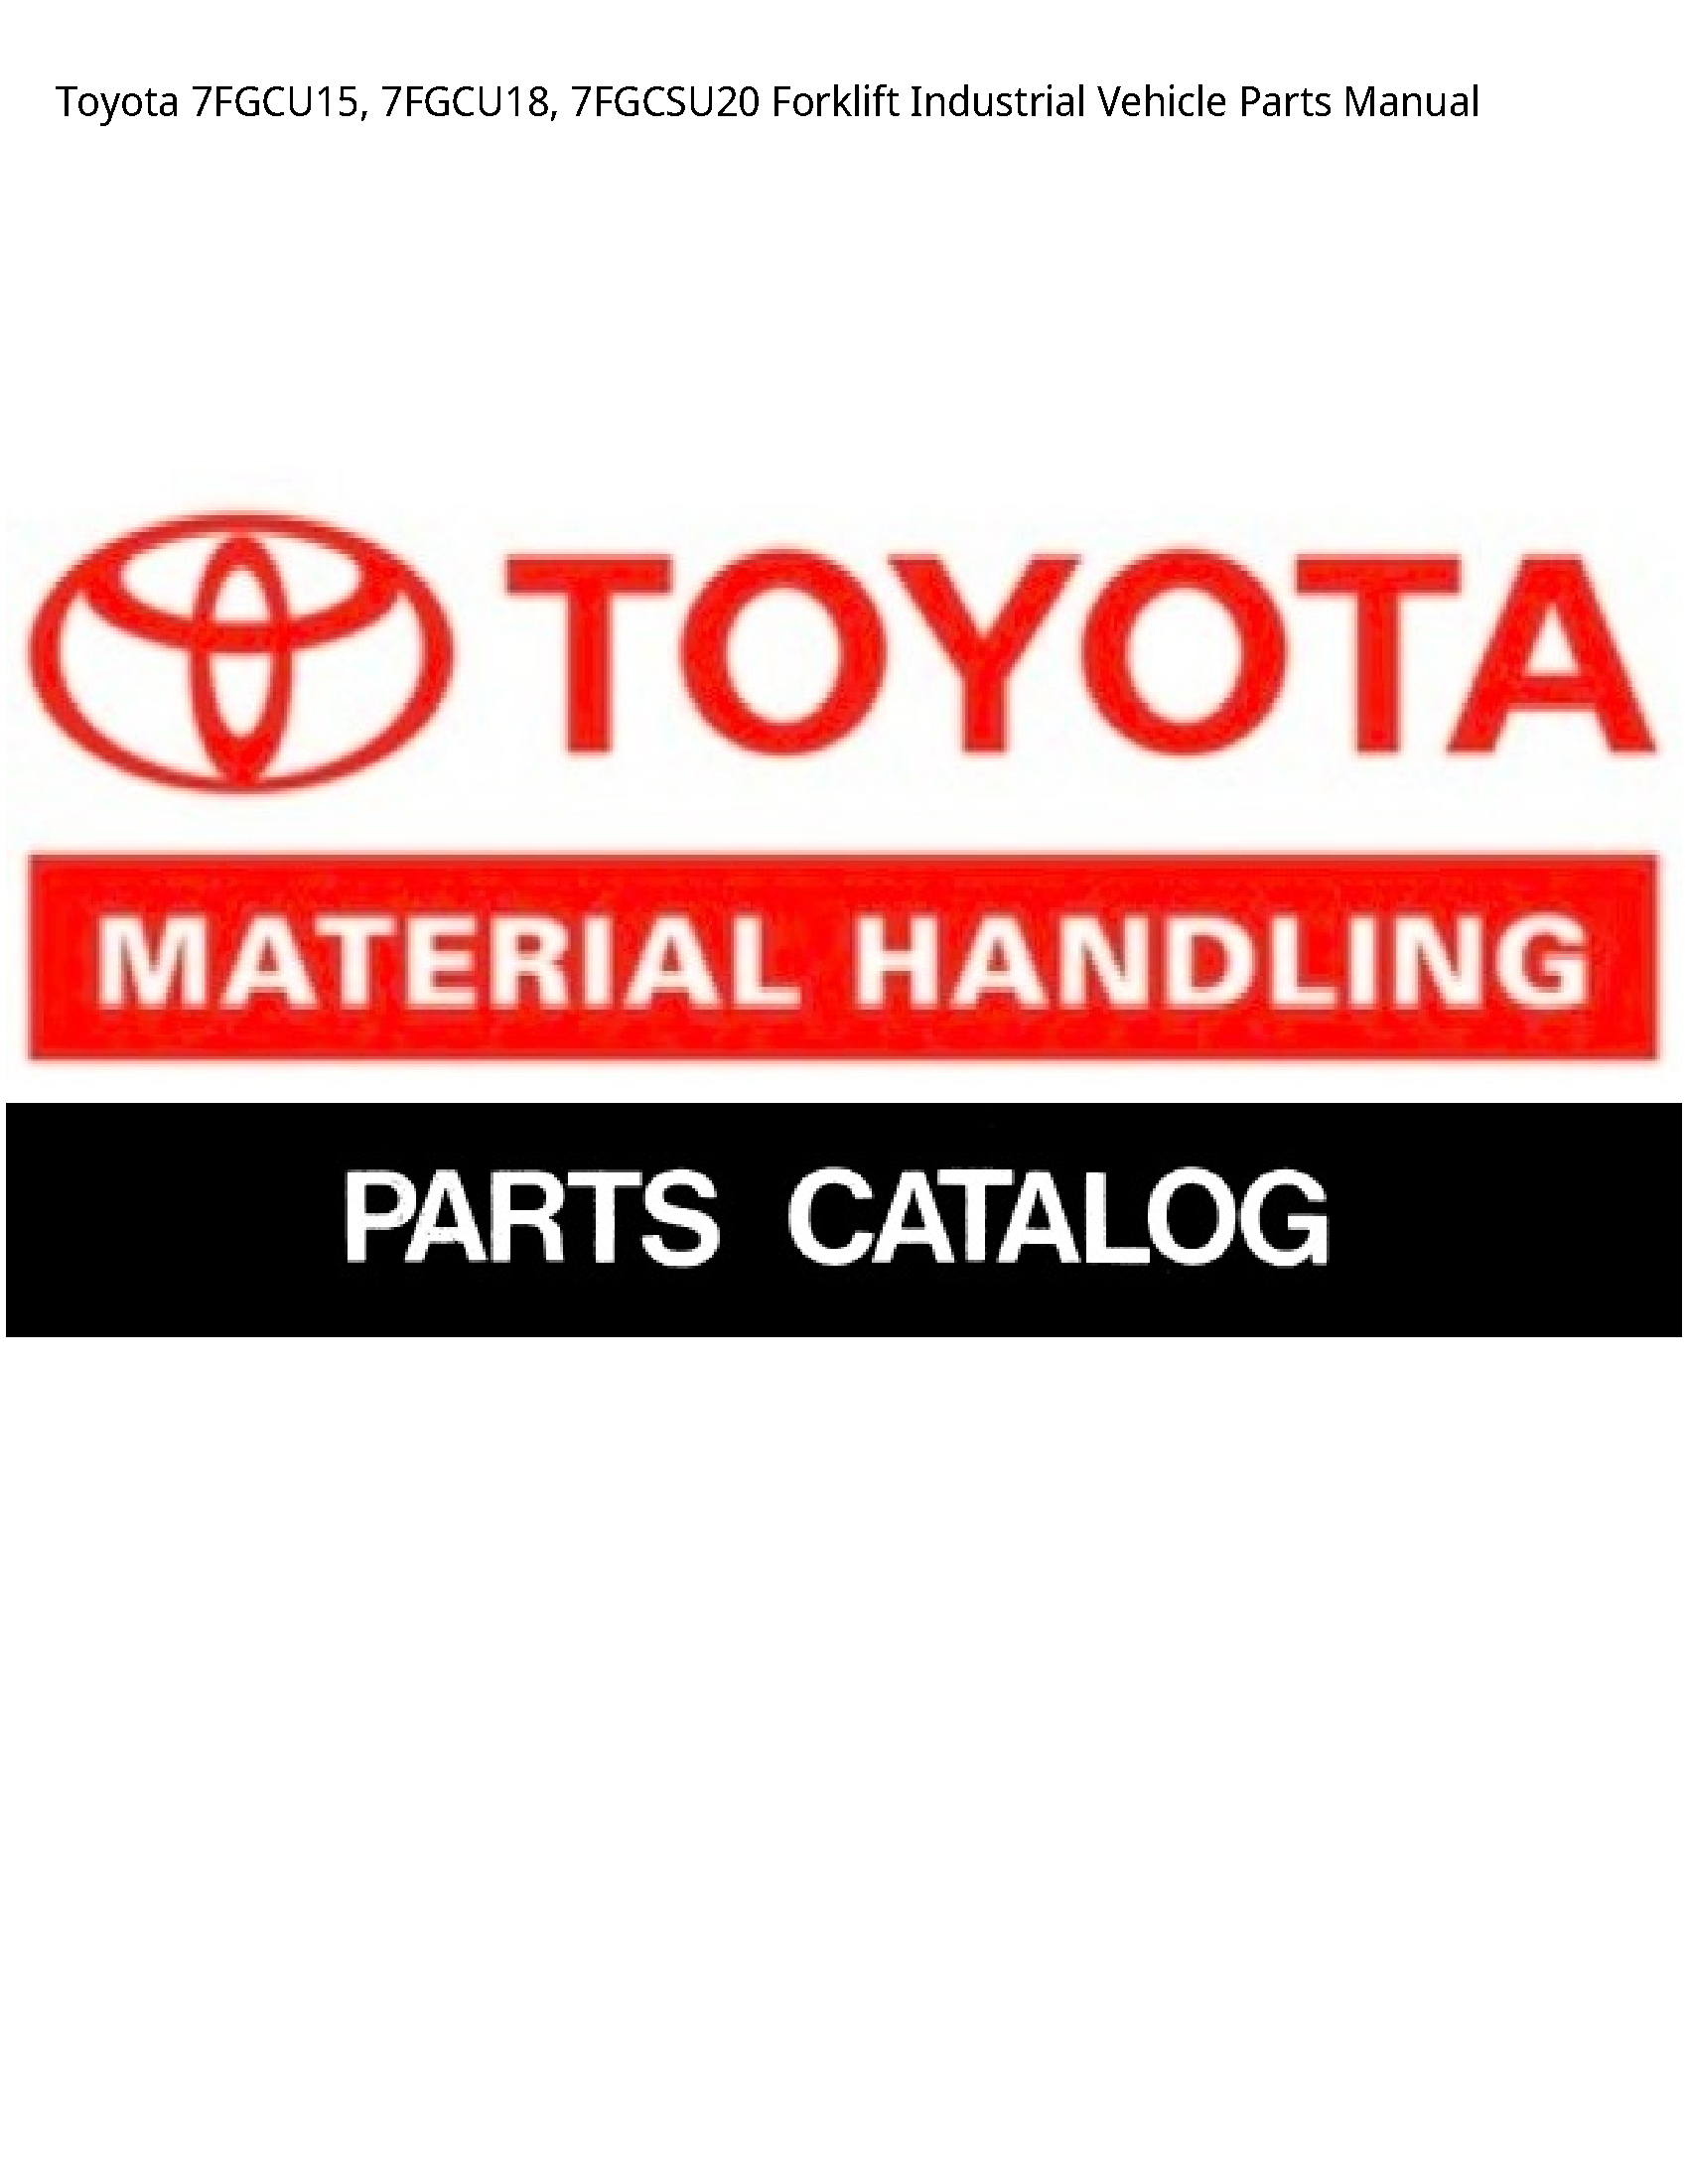 Toyota 7FGCU15 Forklift Industrial Vehicle Parts manual